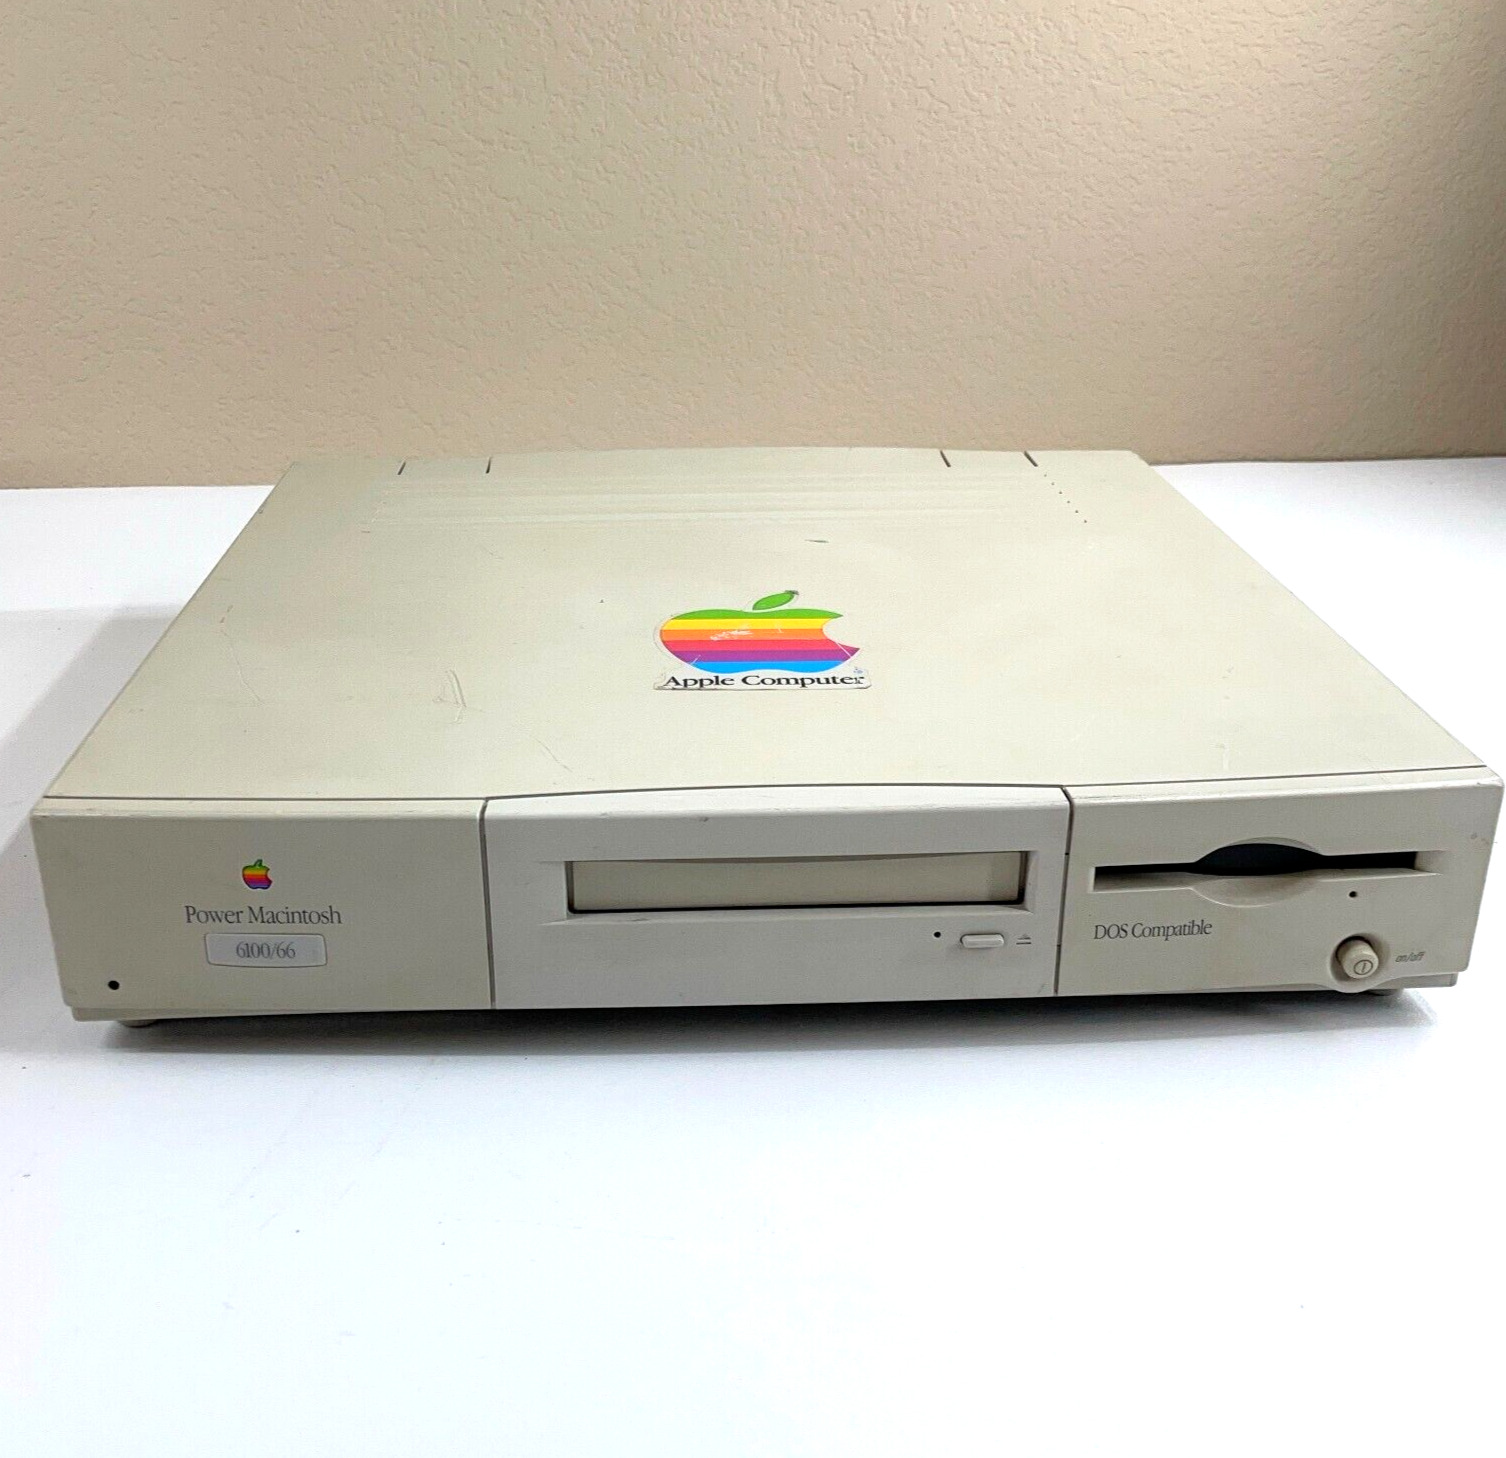 VTG Apple Power Macintosh 6100/66 Computer M1596 Powers On Chimes Read Descrip